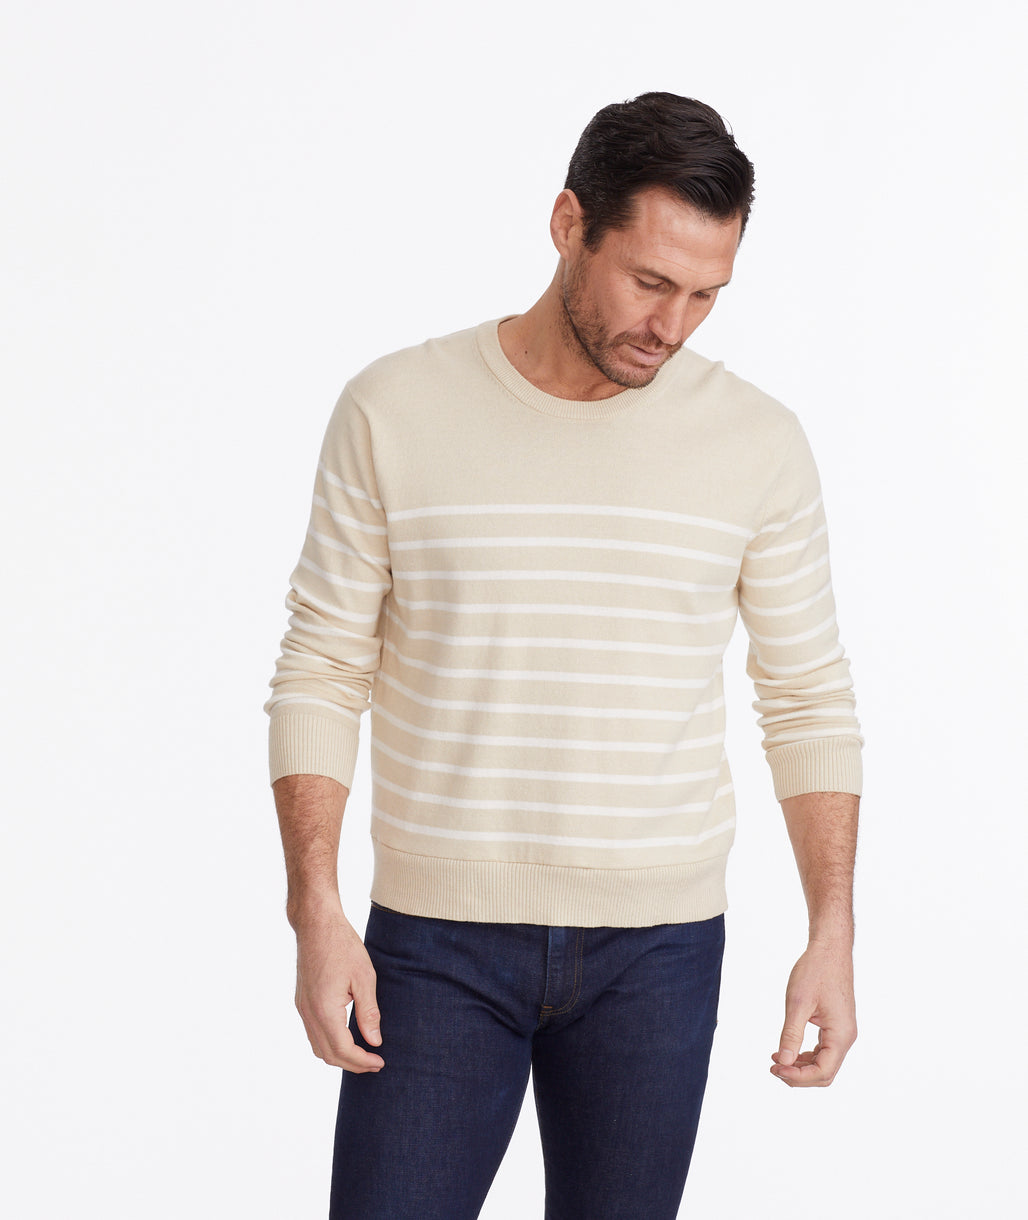 Model wearing a Tan Striped Crewneck Sweater